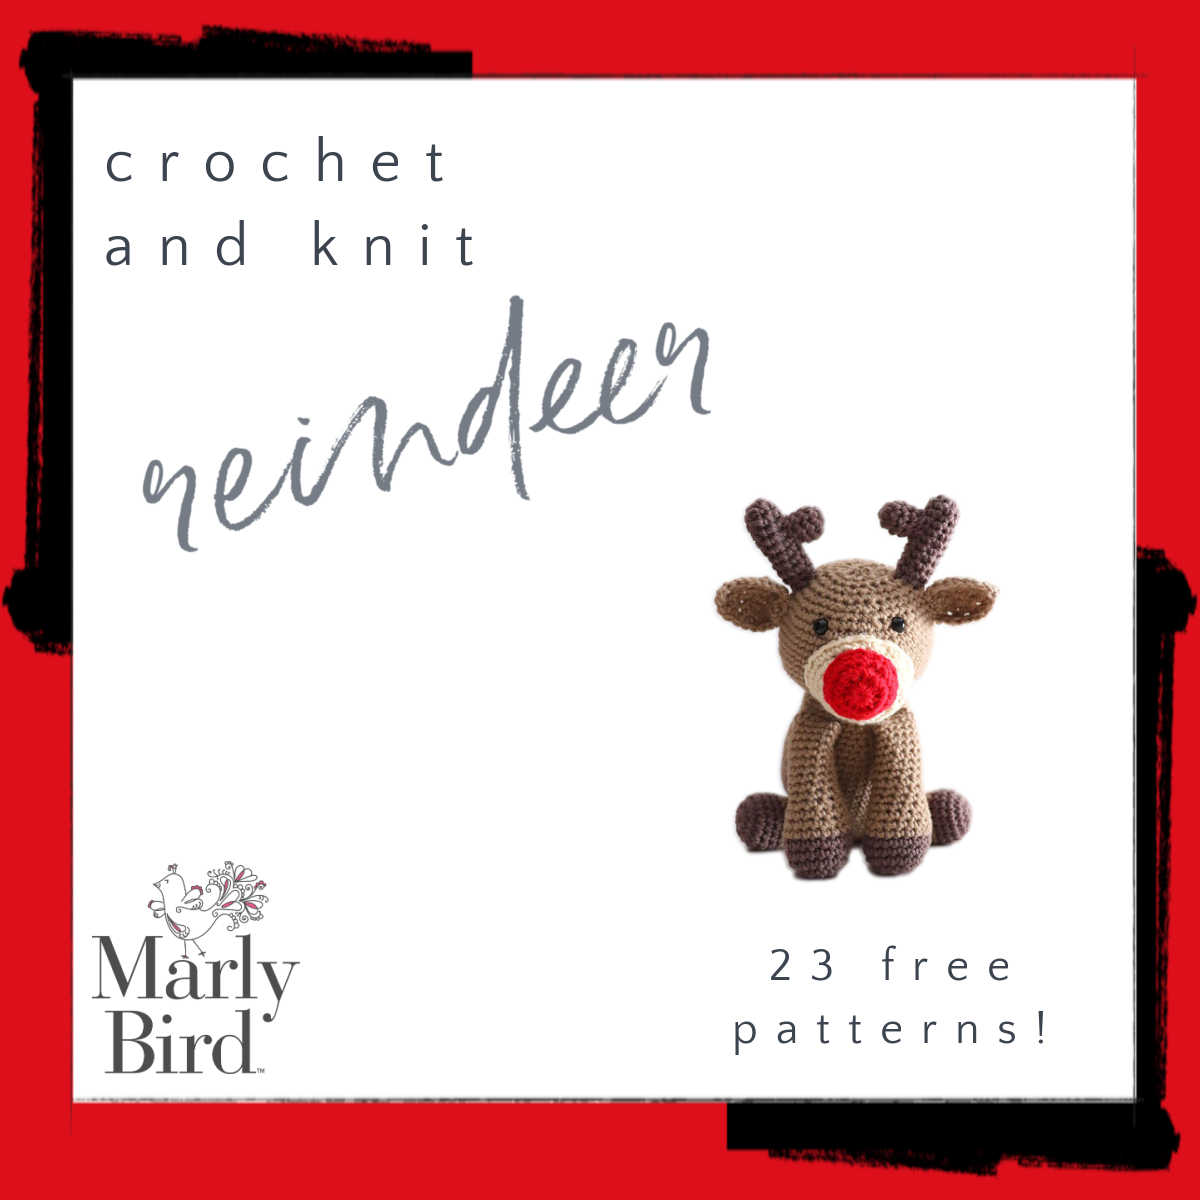 Knit and crochet reindeer patterns - Marly Bird